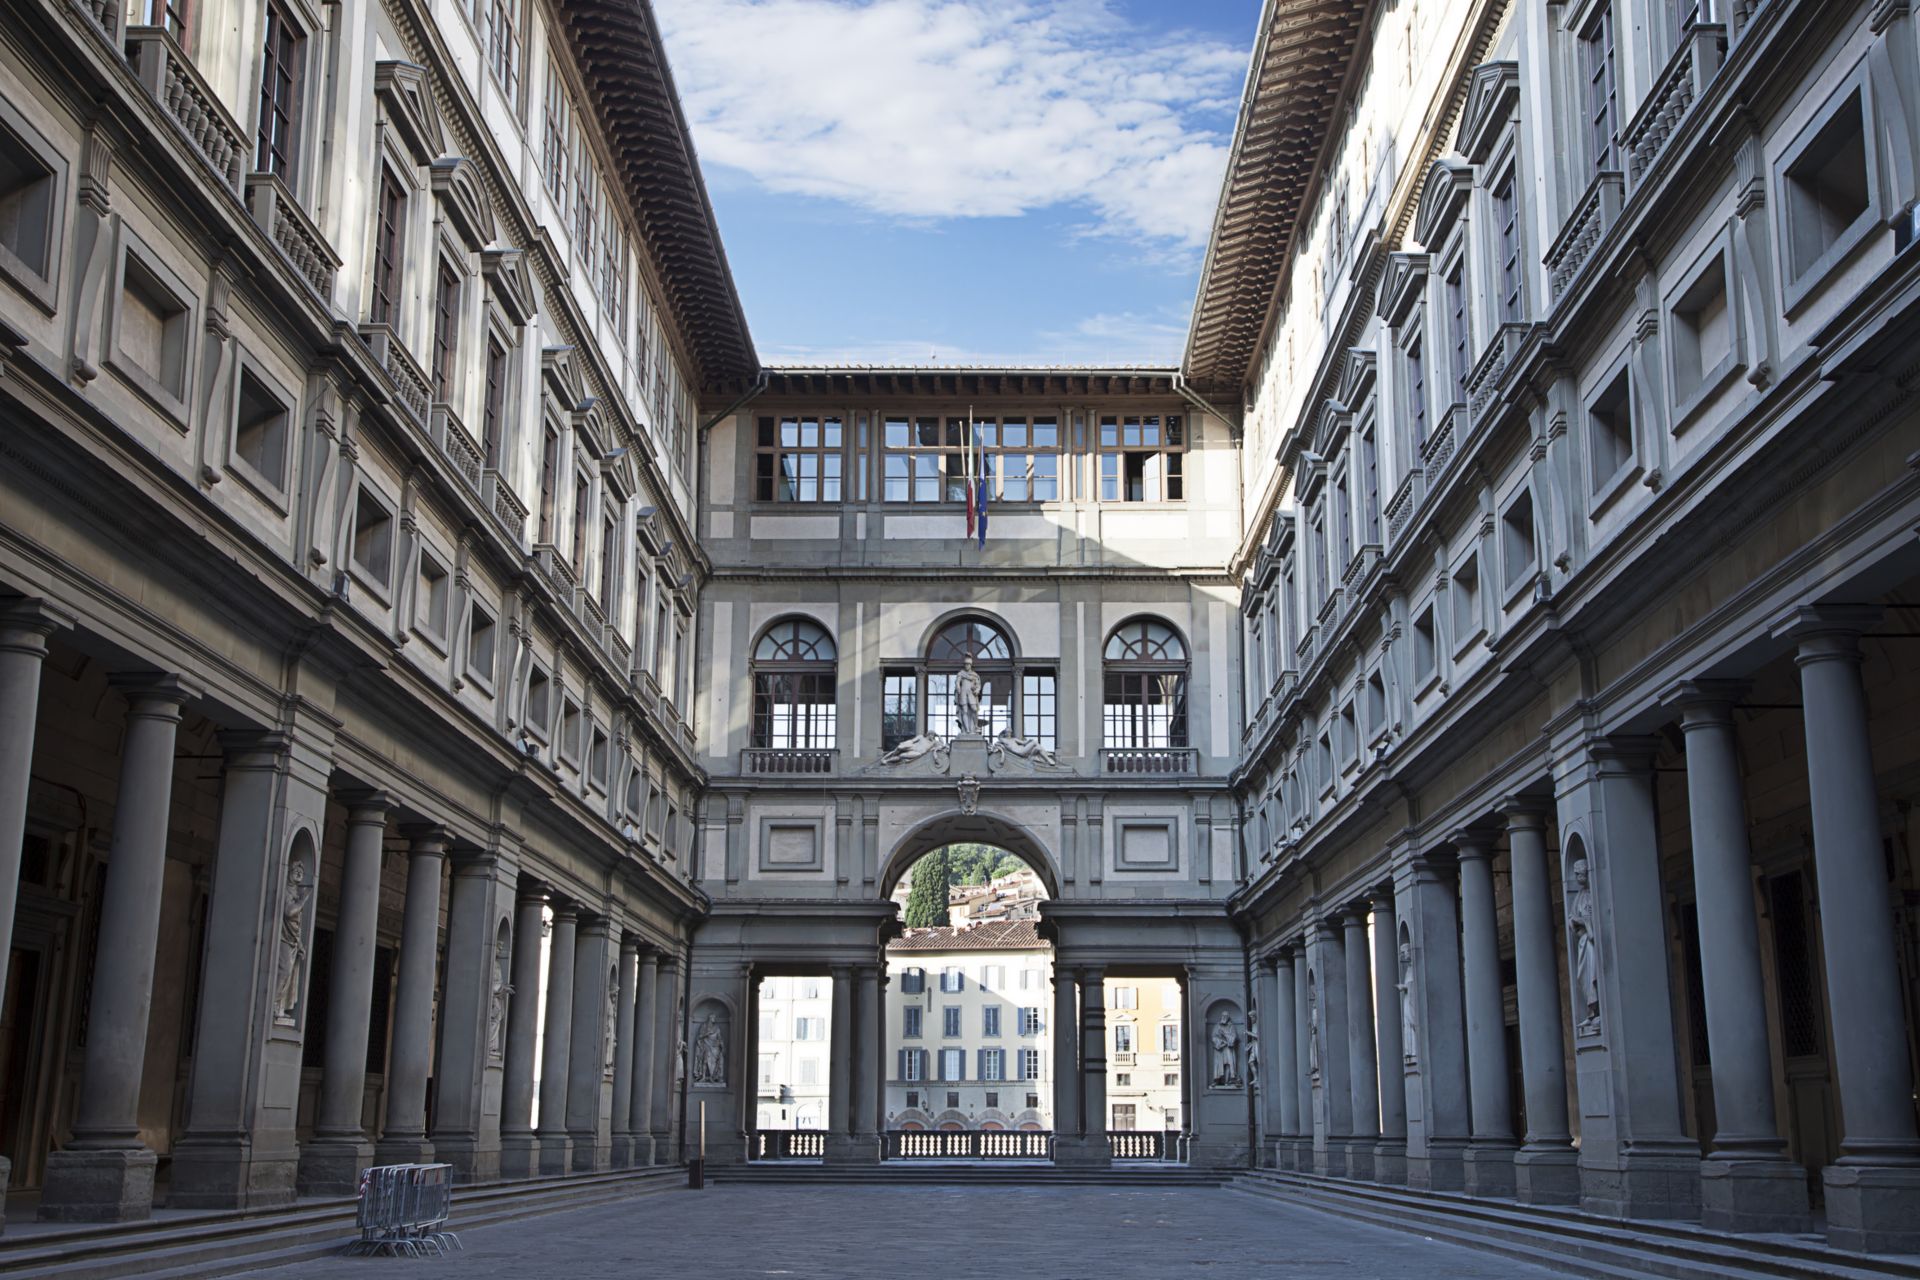 Uffizi Gallery, primary art museum of Florence. Tuscany, Italy